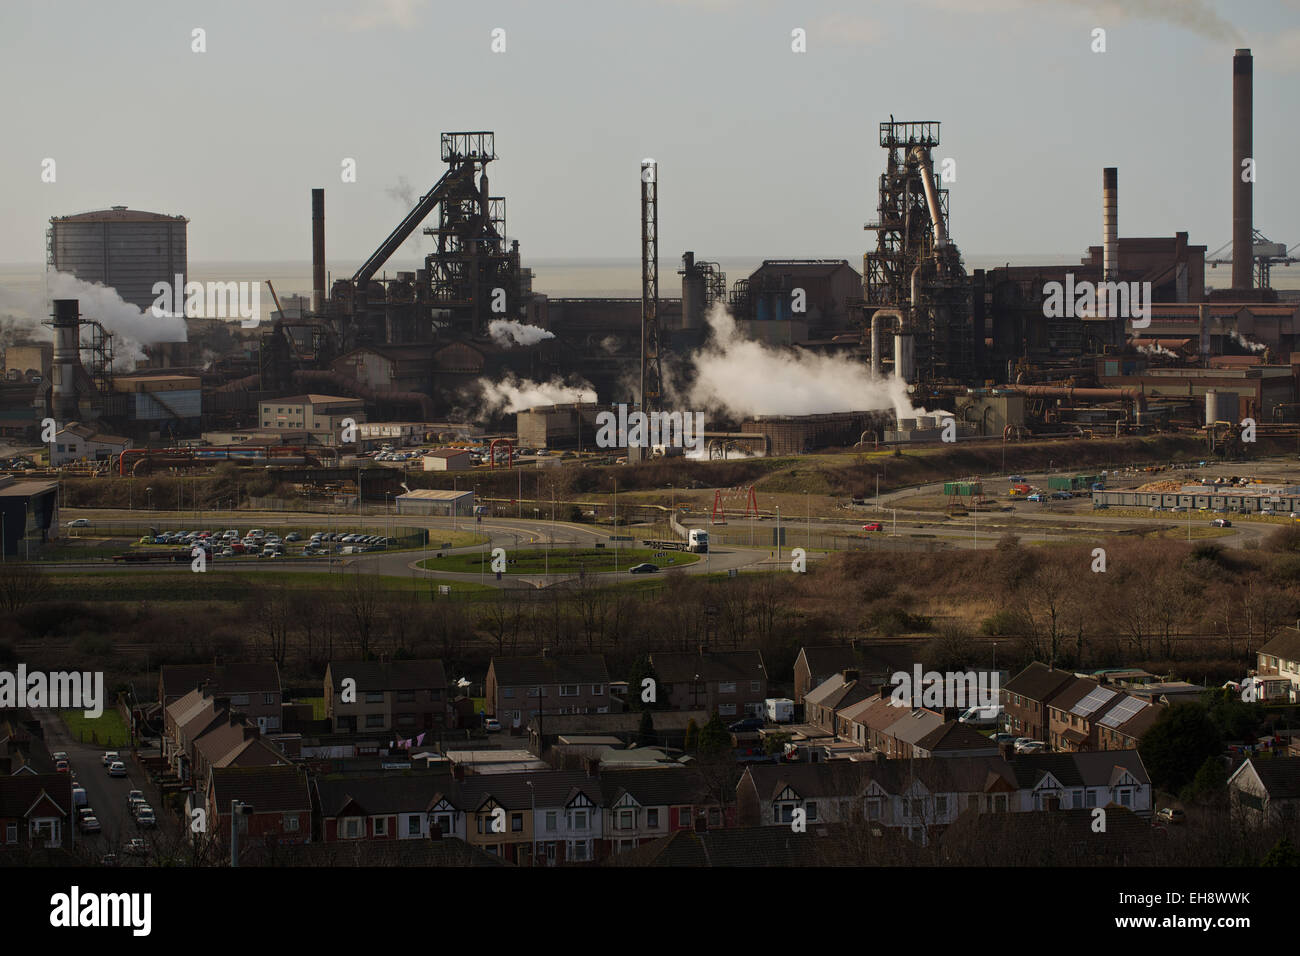 Tata Steel Strip Products UK Port Talbot Works, Tata Steel Works, Port Talbot, South Wales, UK, EU. Stock Photo